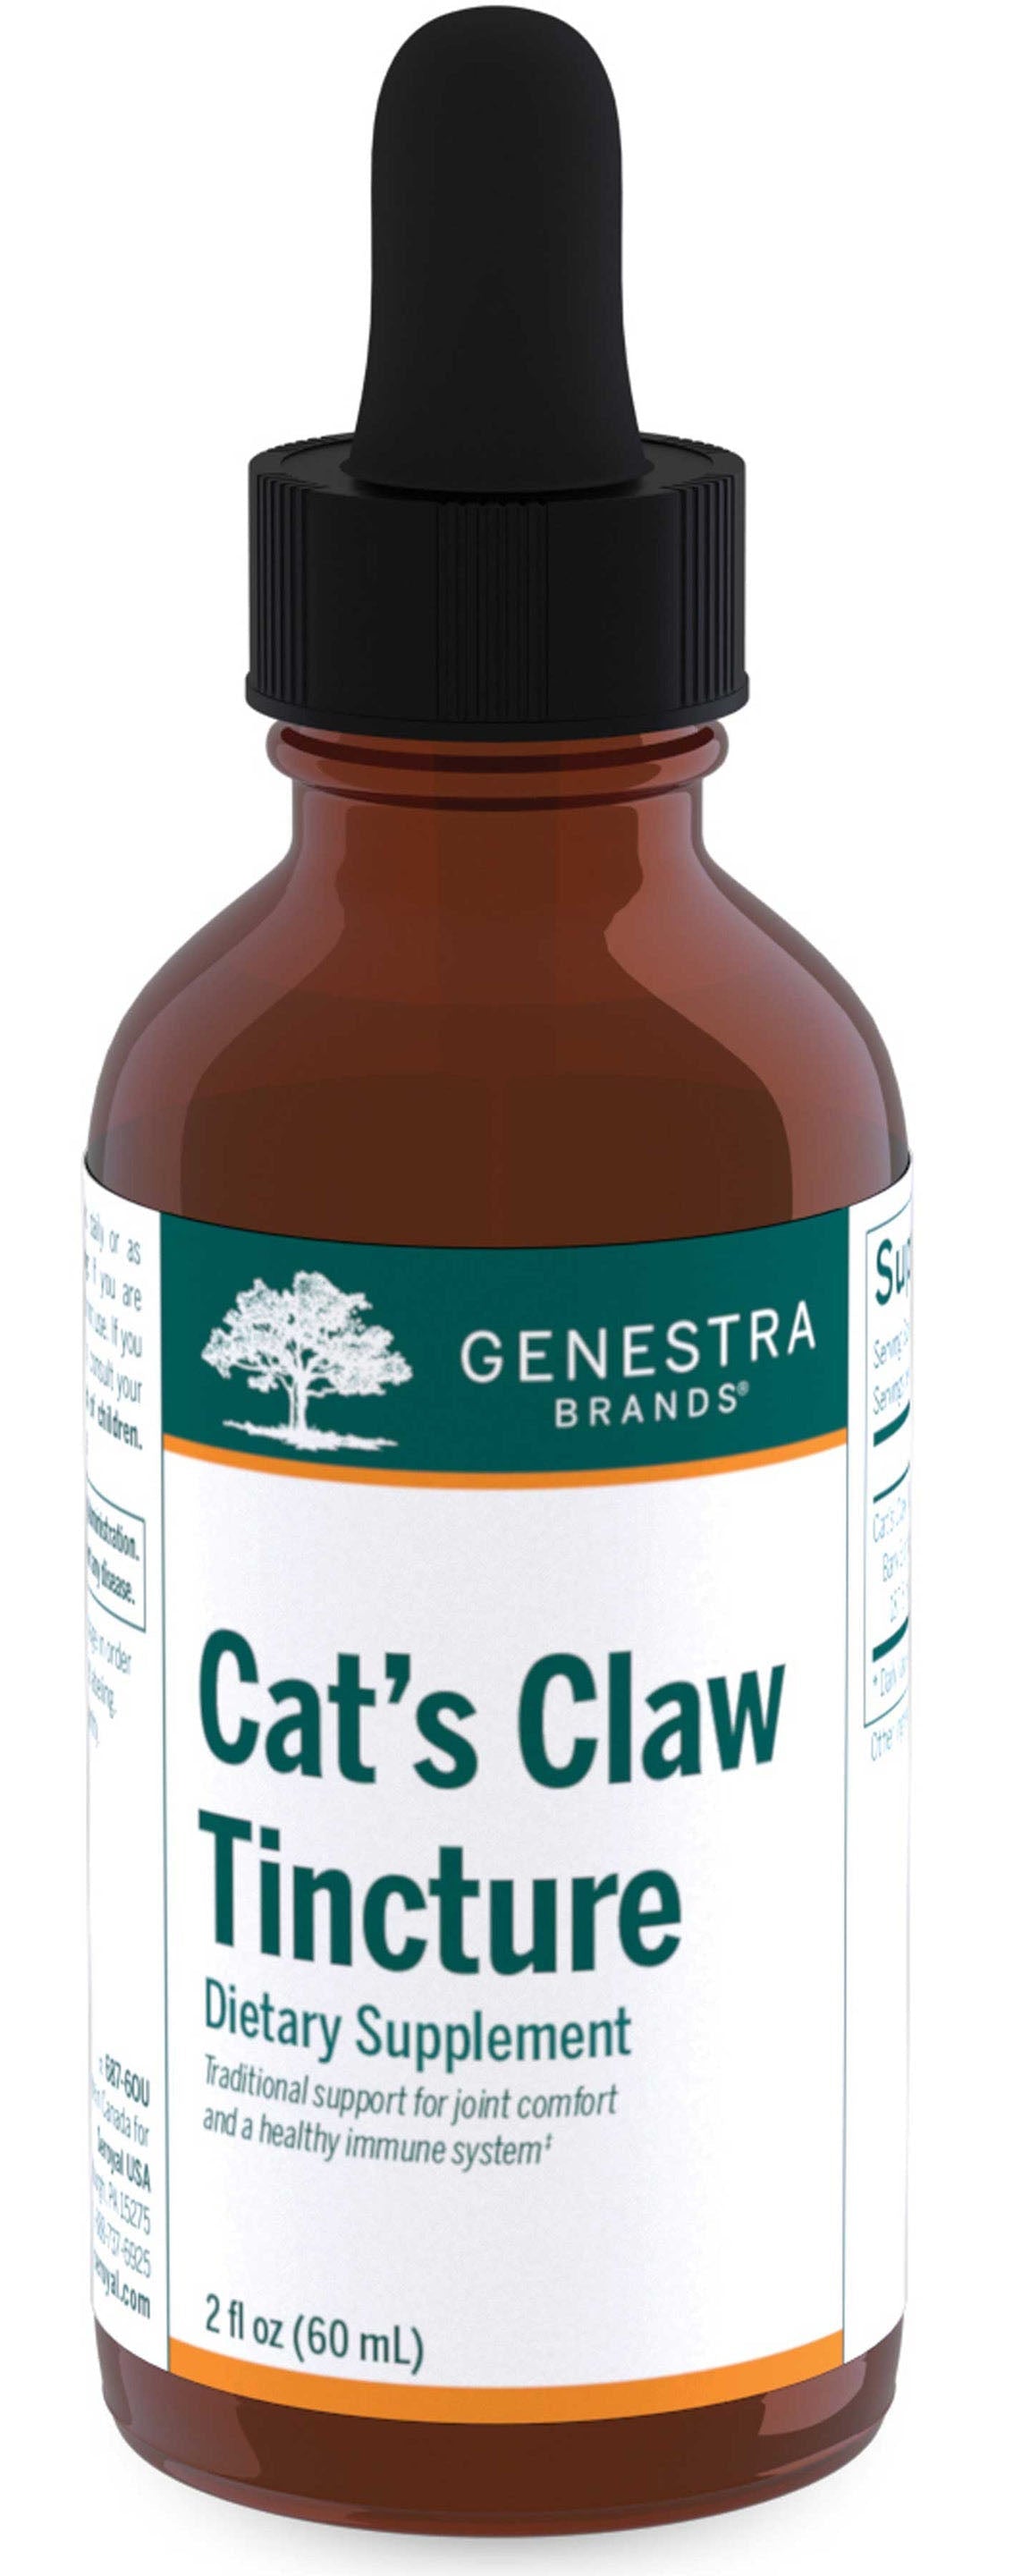 GENESTRA Cat’s Claw Tincture (60 ml)